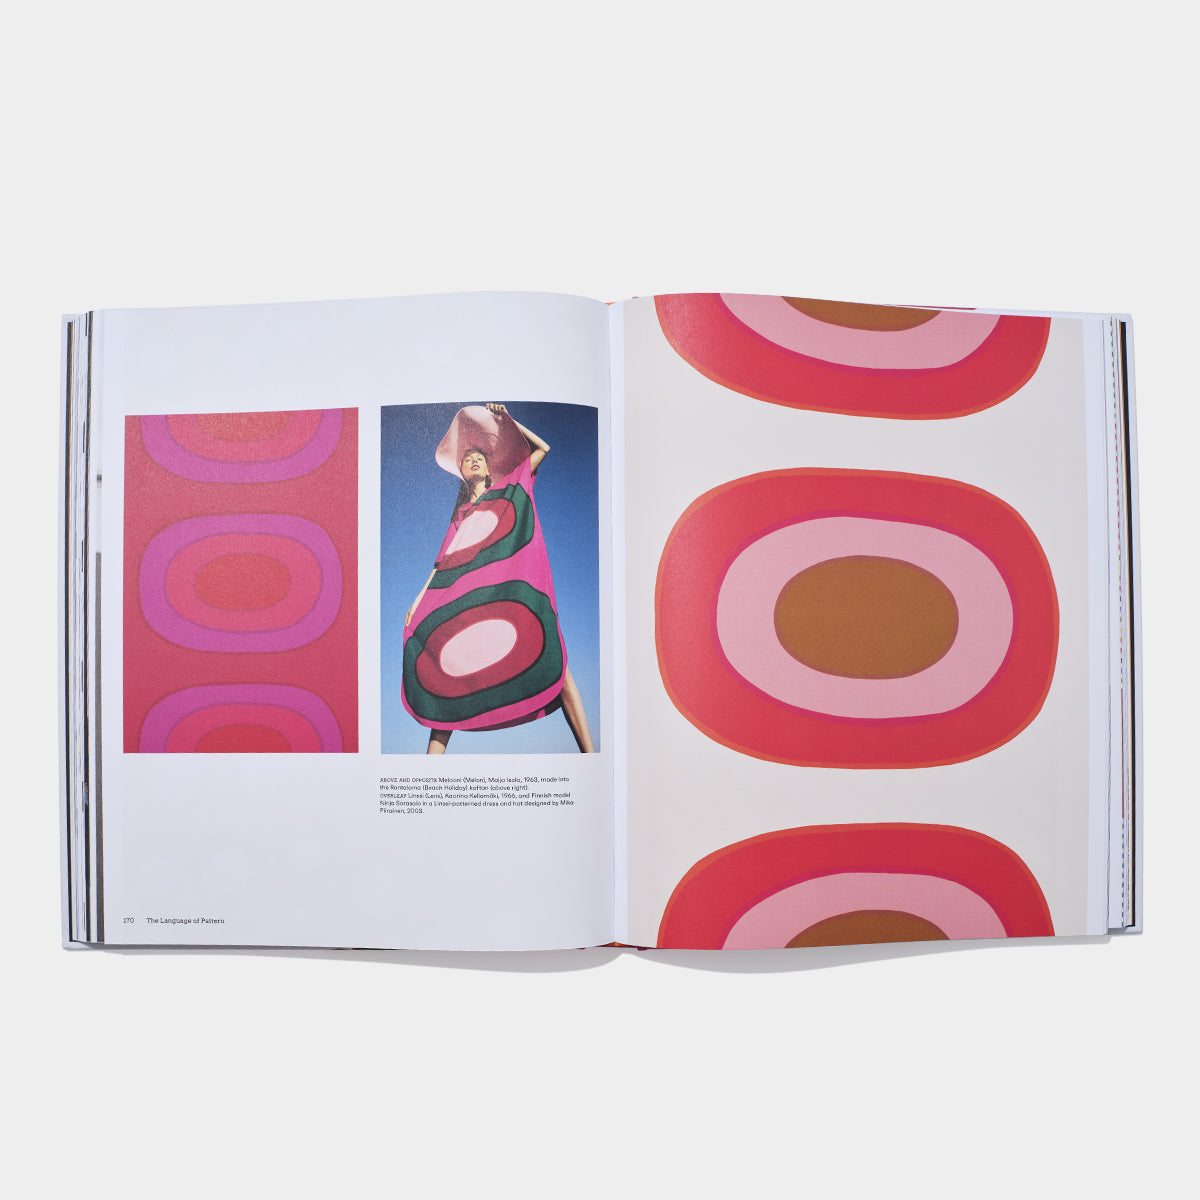 Marimekko: The Art of Print Making